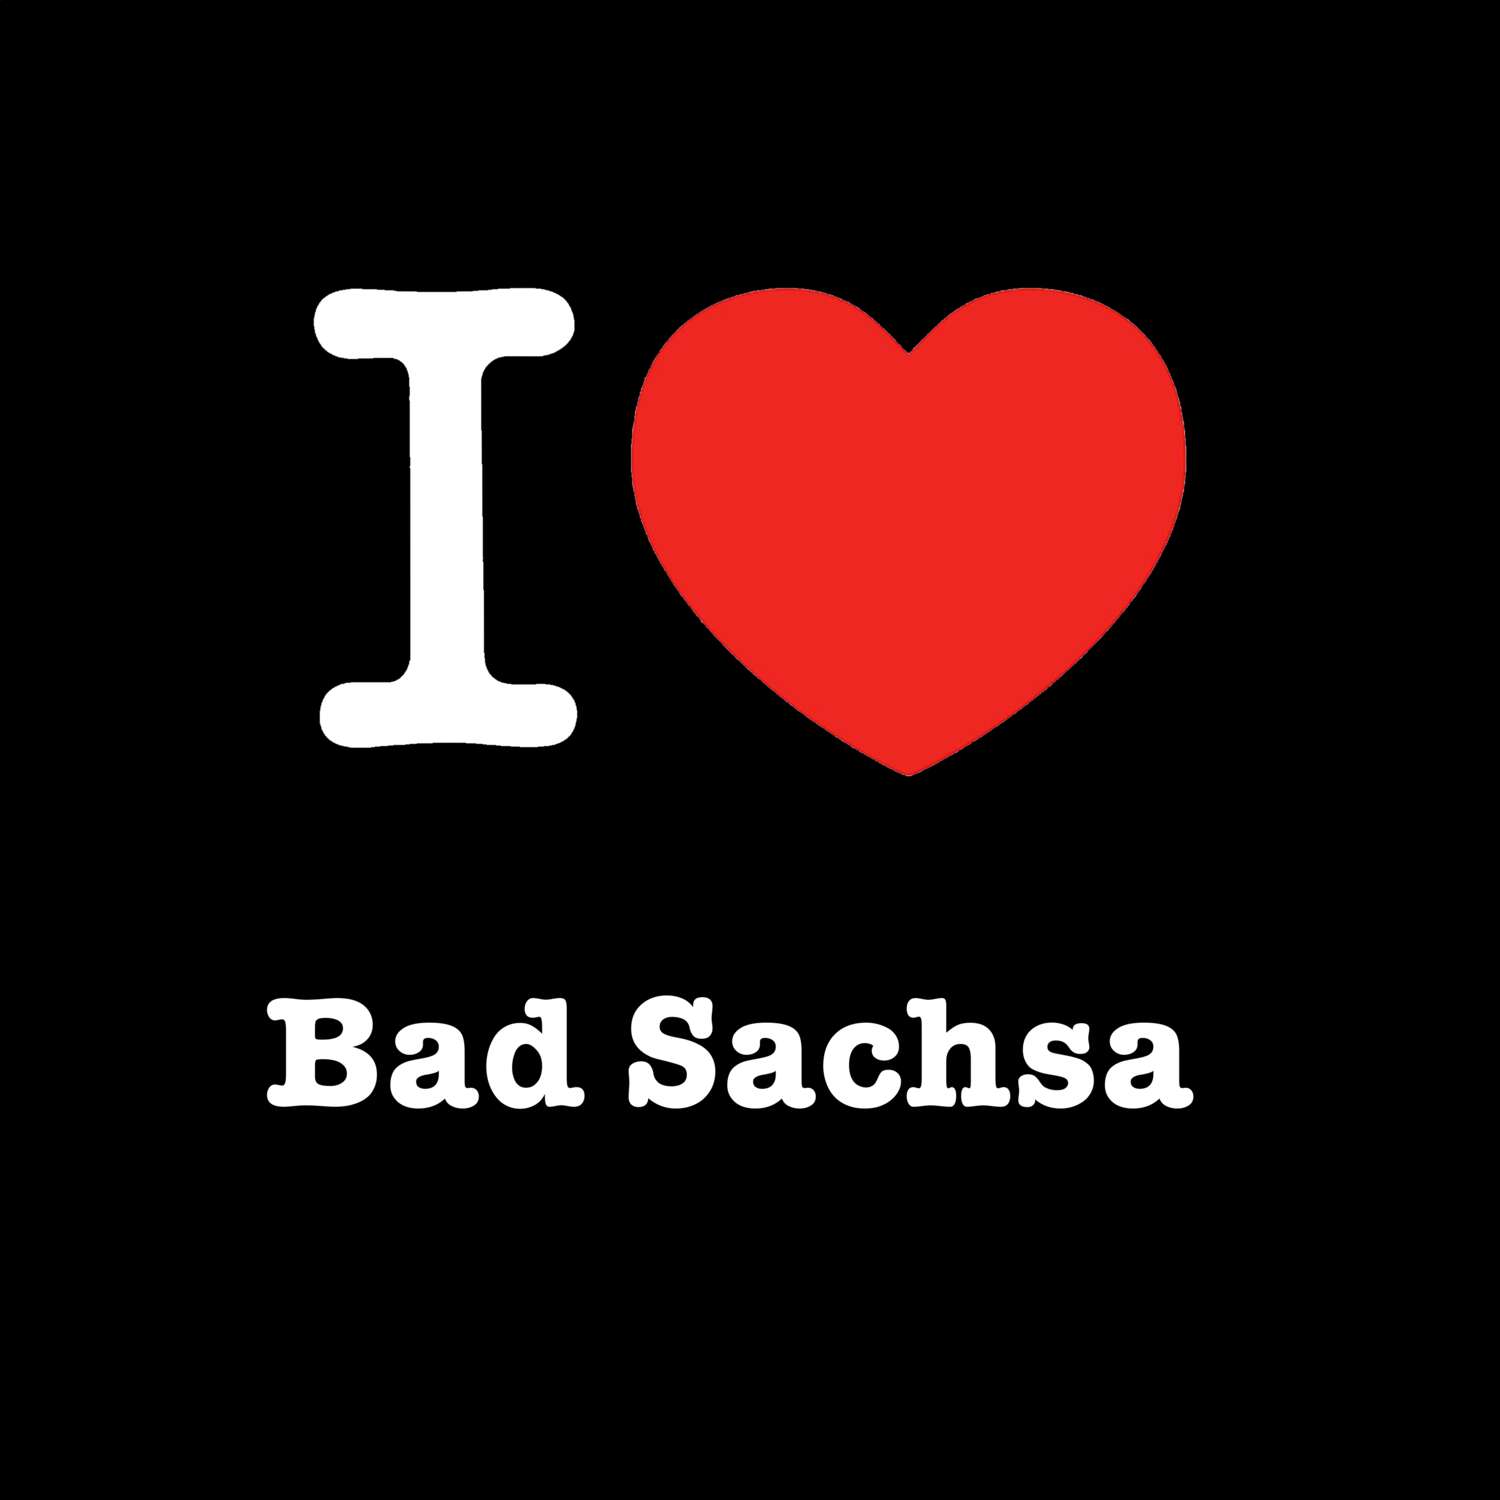 Bad Sachsa T-Shirt »I love«